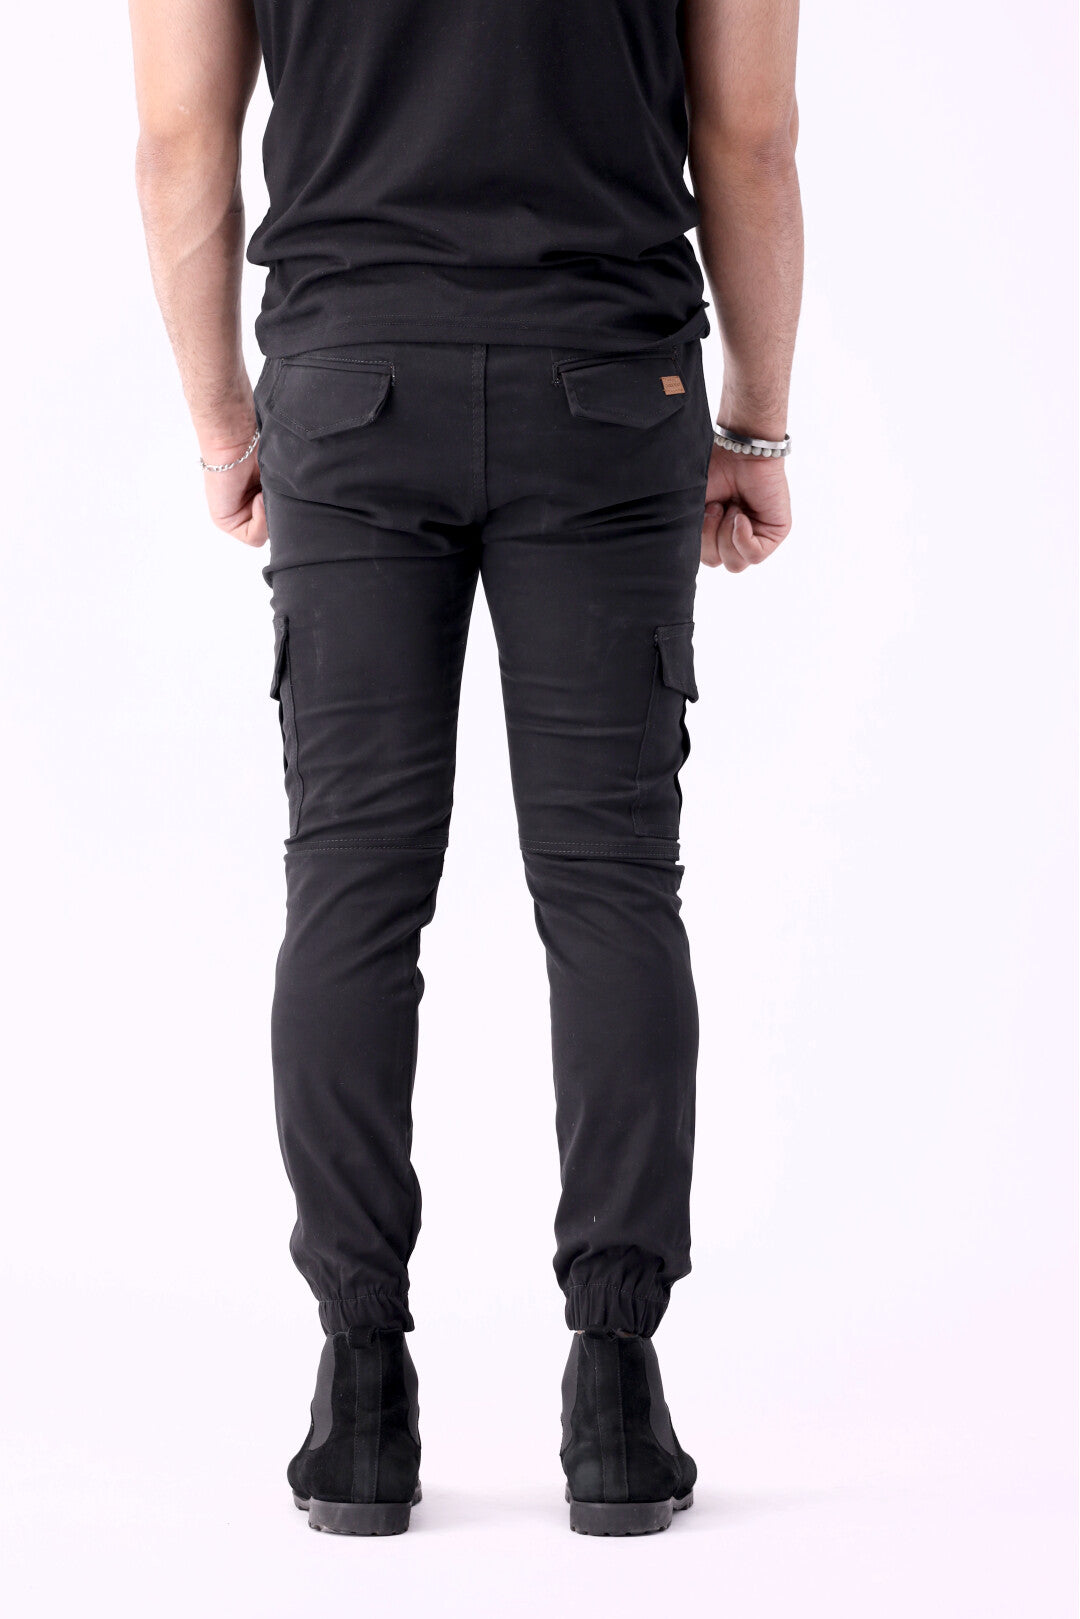 Black Lightweight Cargo Six Pocket Trousers for Men, 6 Pocket Cargo Pant